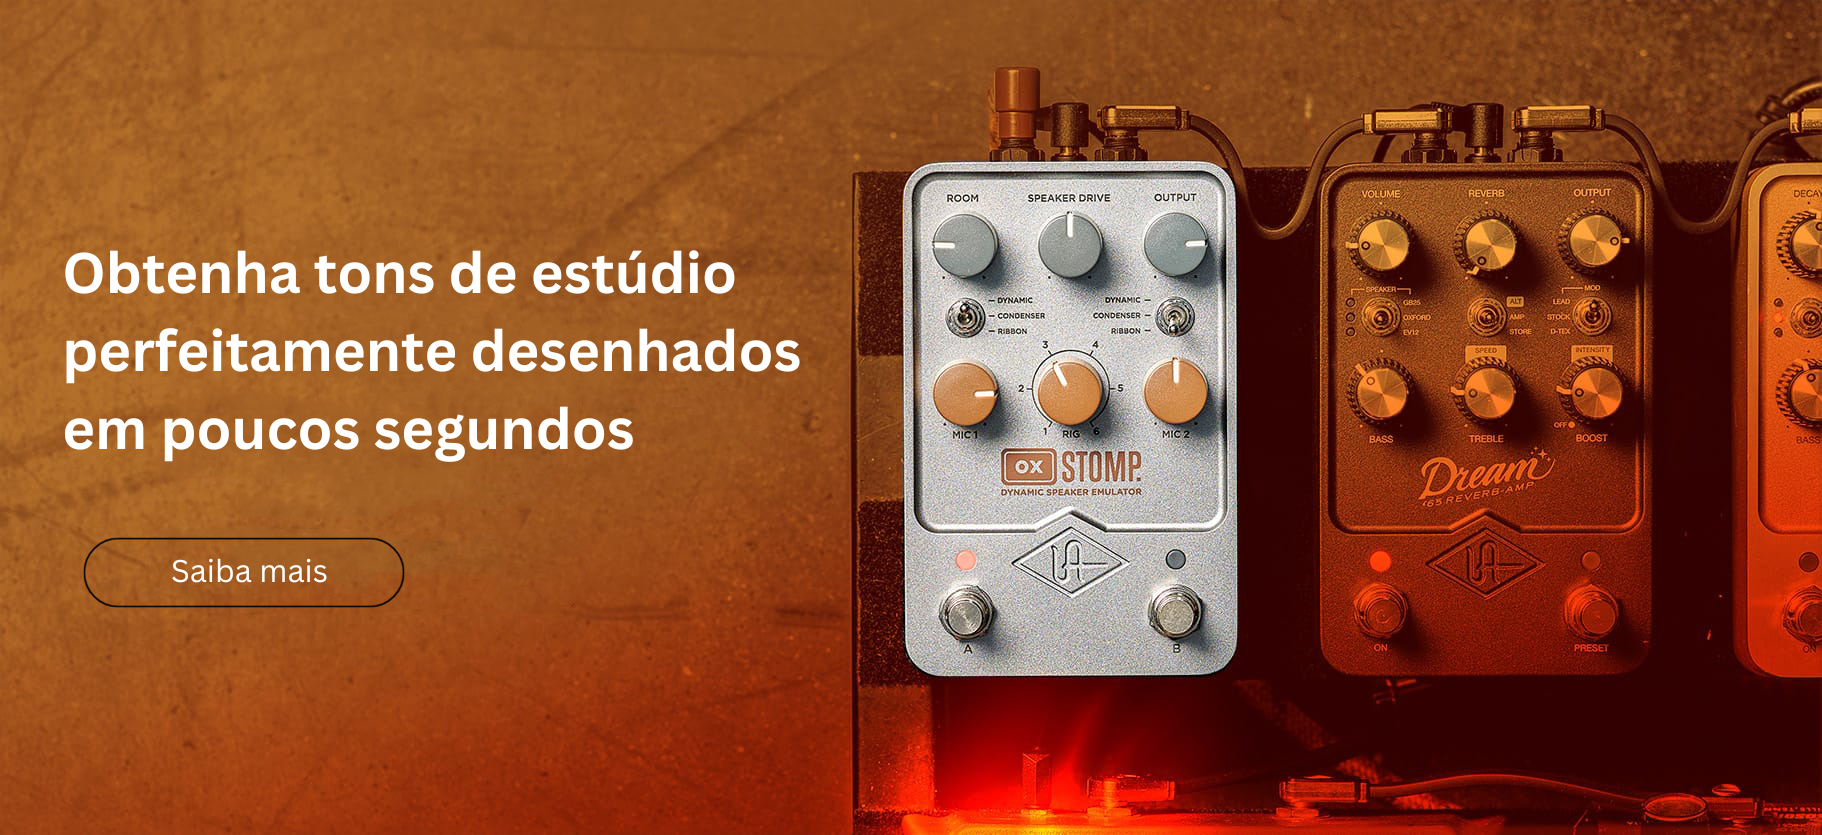 Universal Audio Brasil